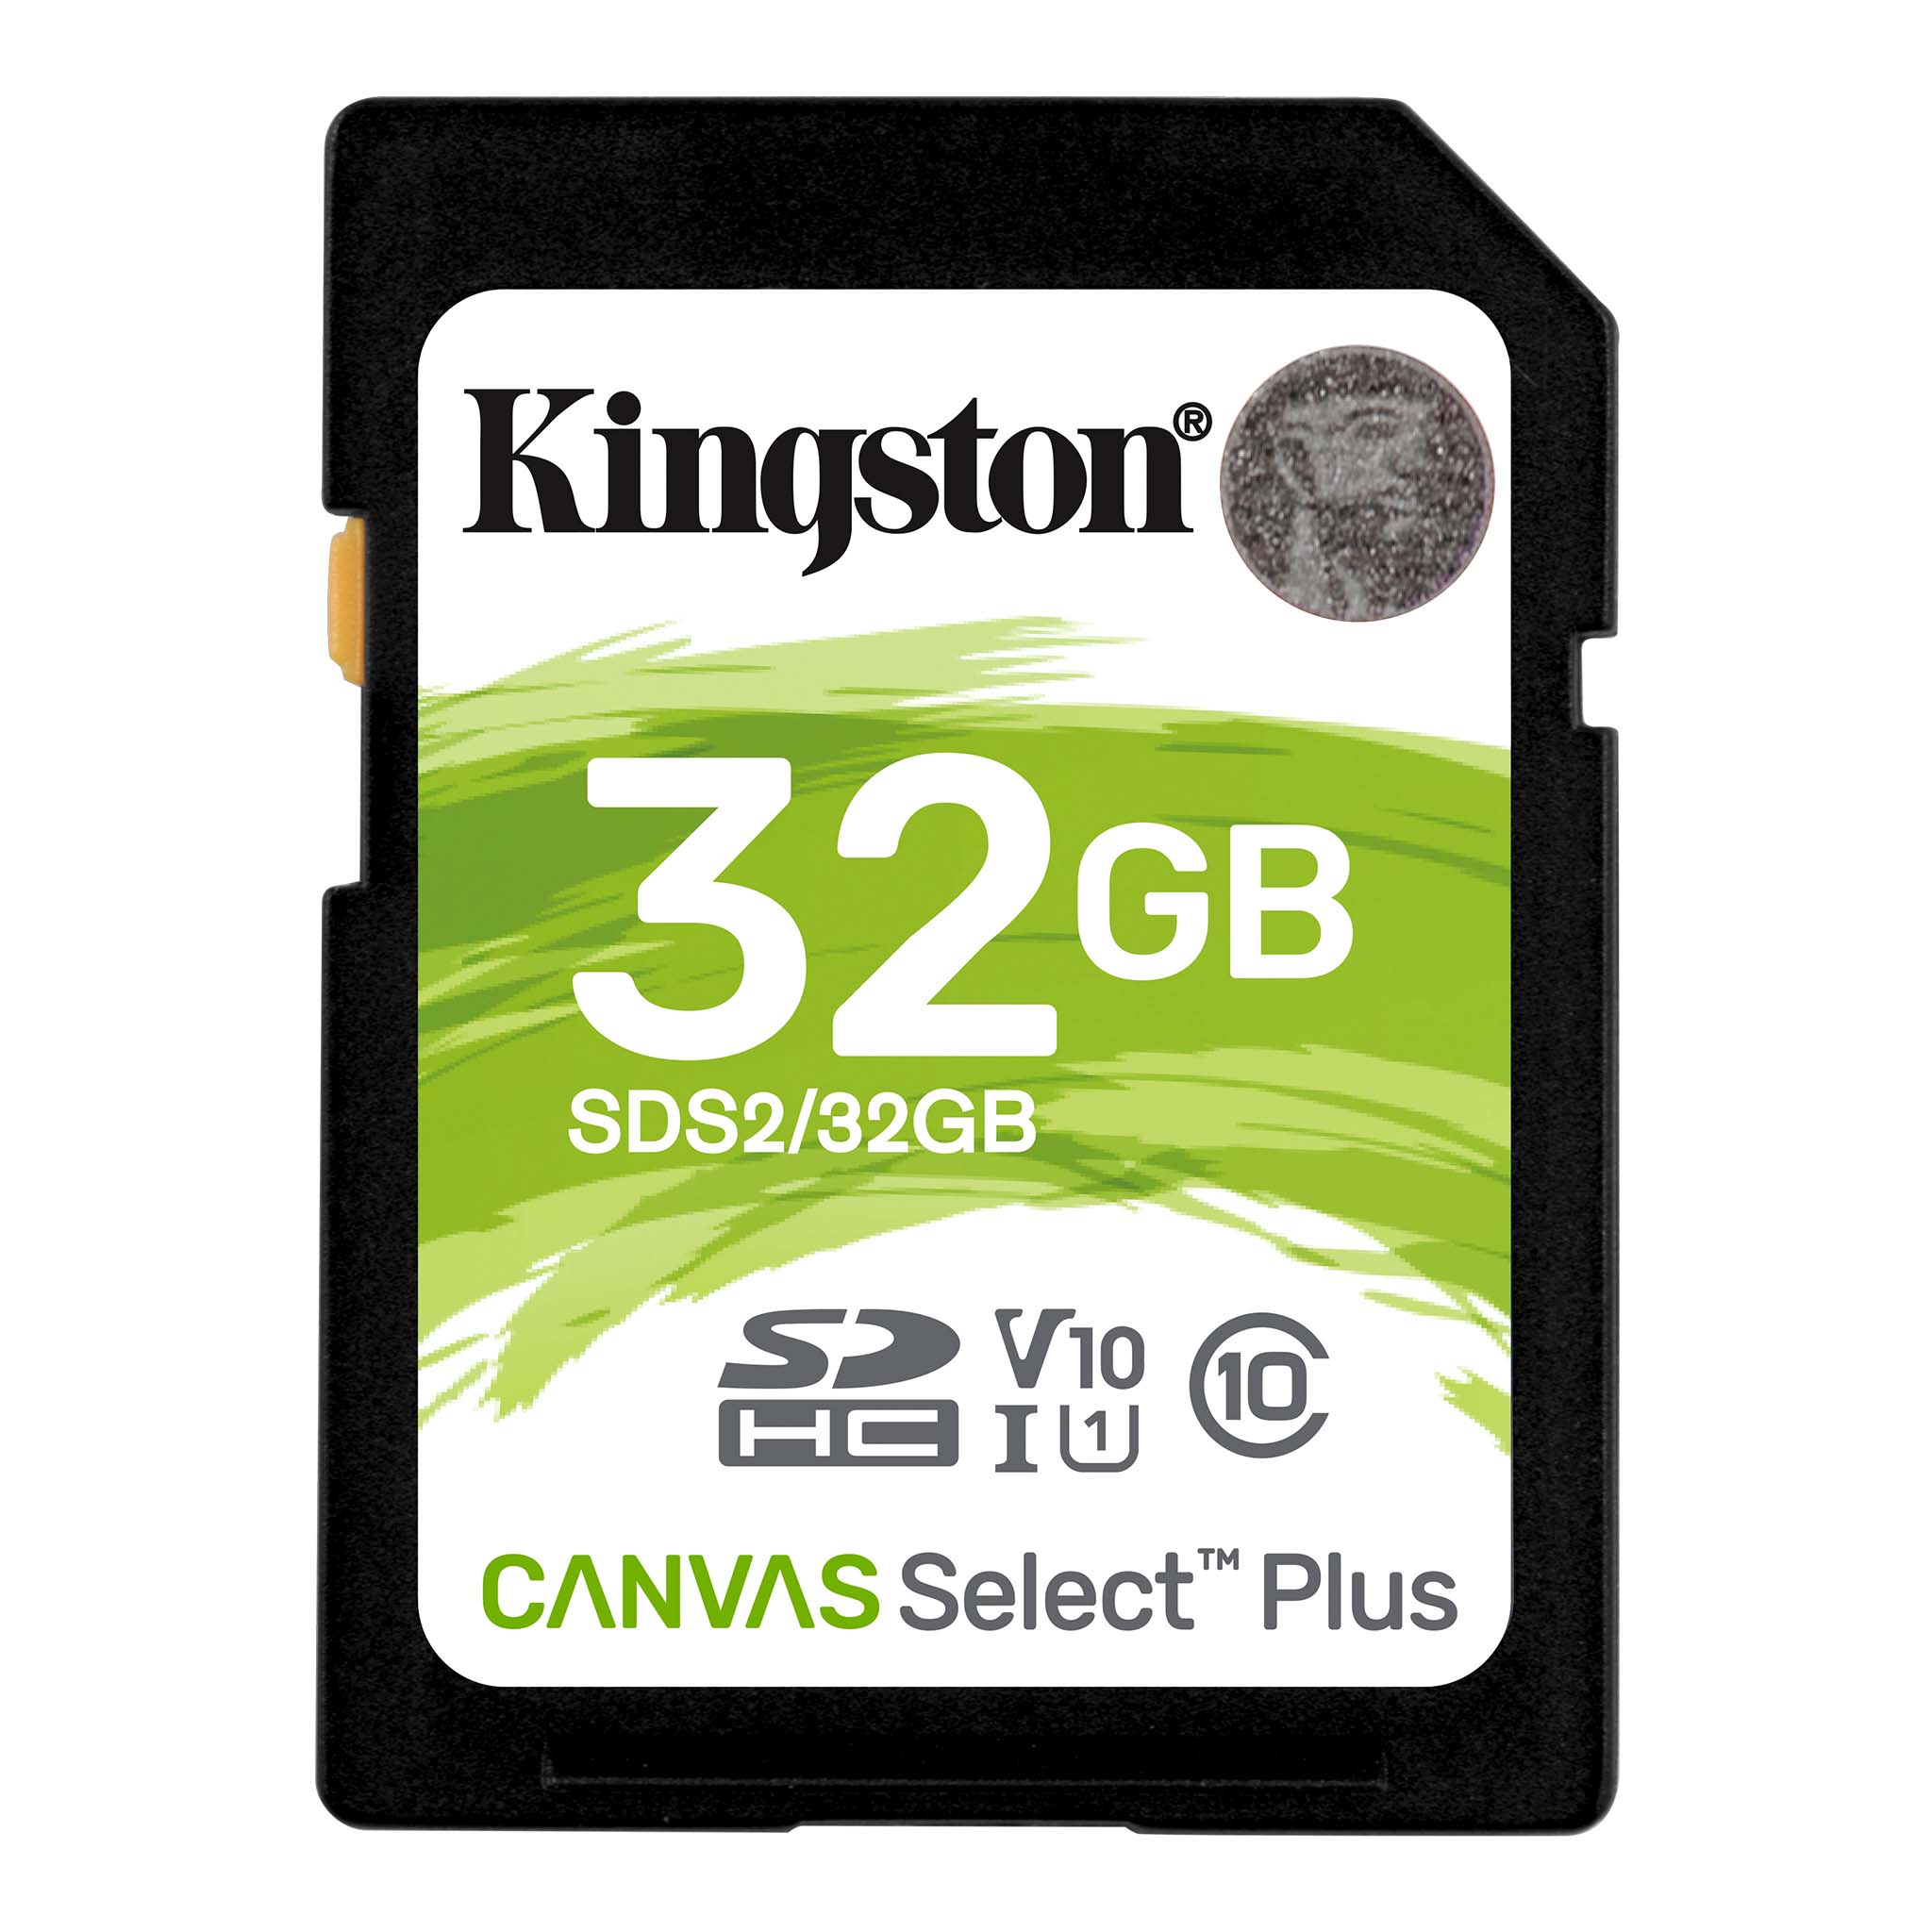 Kingston 128GB Microsoft Lumia 535 MicroSDXC Canvas Select Plus Card Verified by SanFlash. 100MBs Works with Kingston 